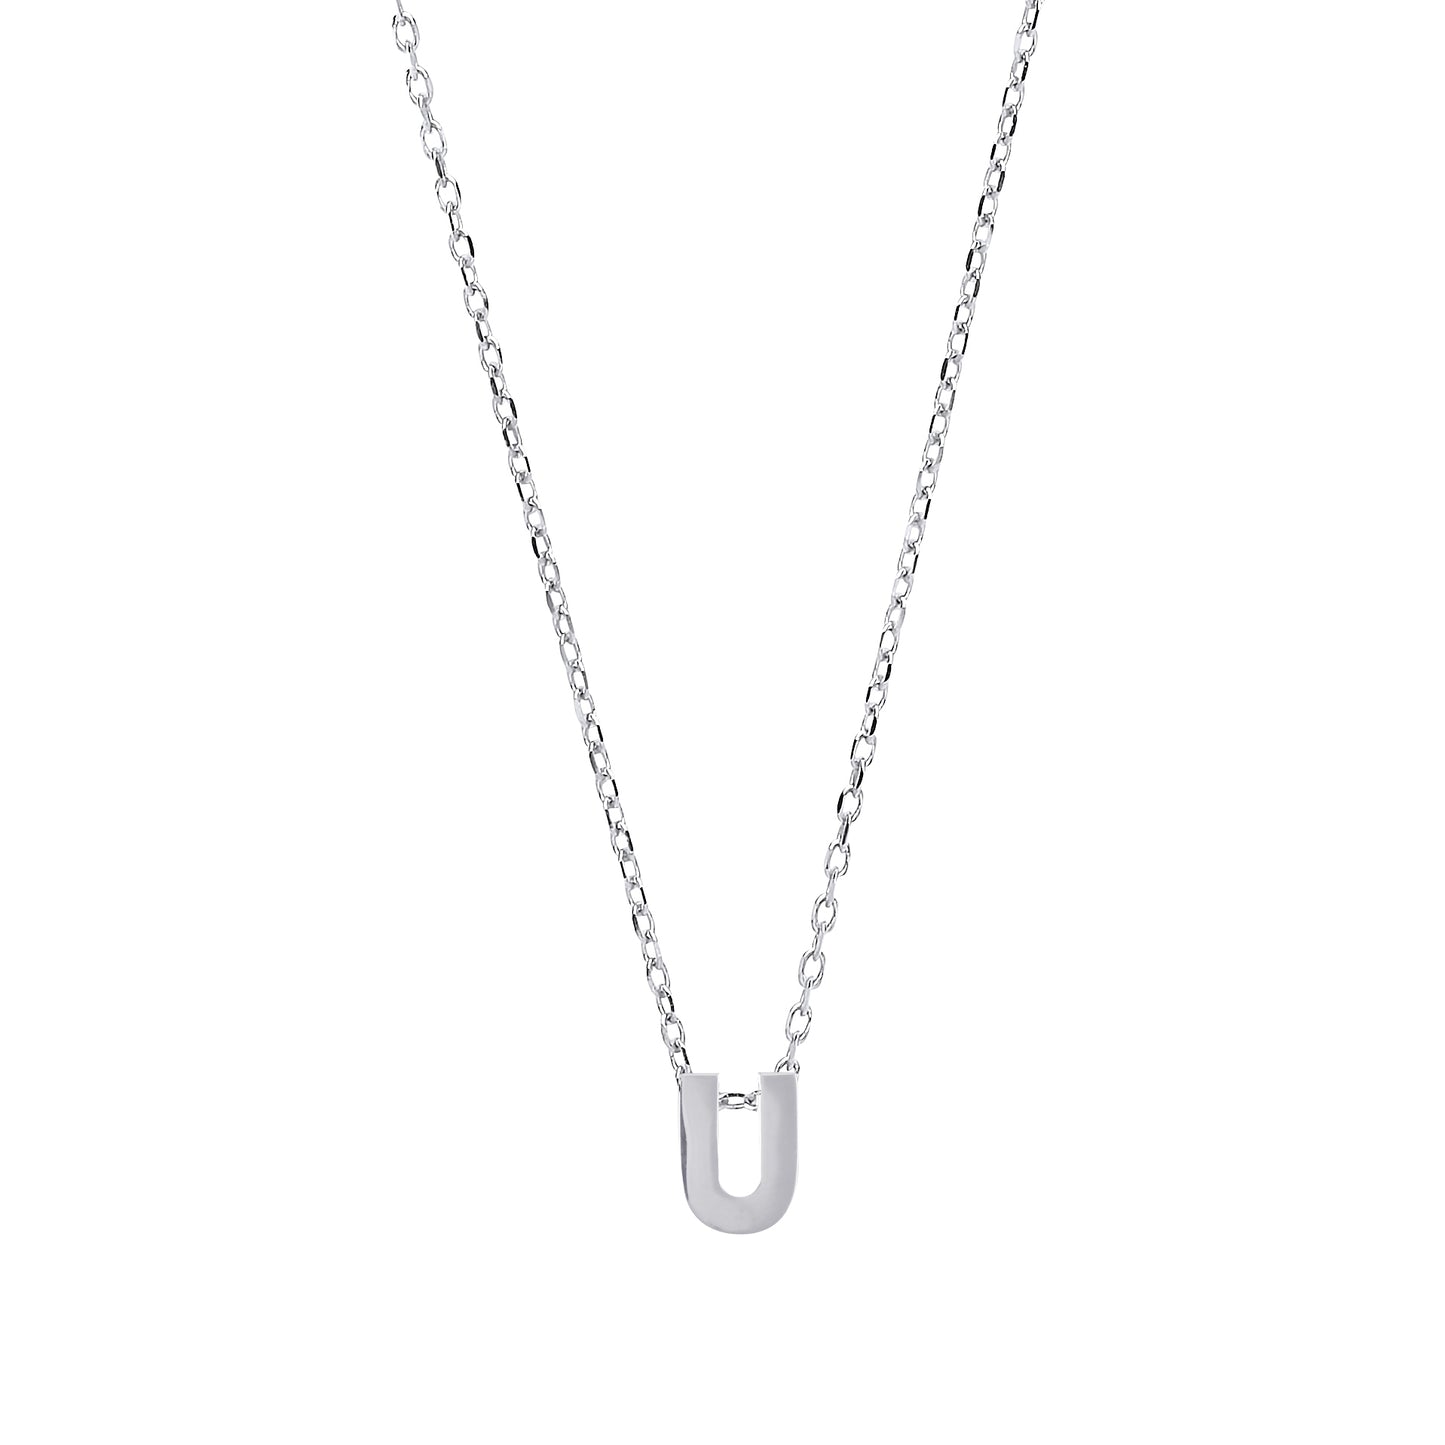 Silver  Letter U Initial Pendant Necklace 18 inch - GIN4U